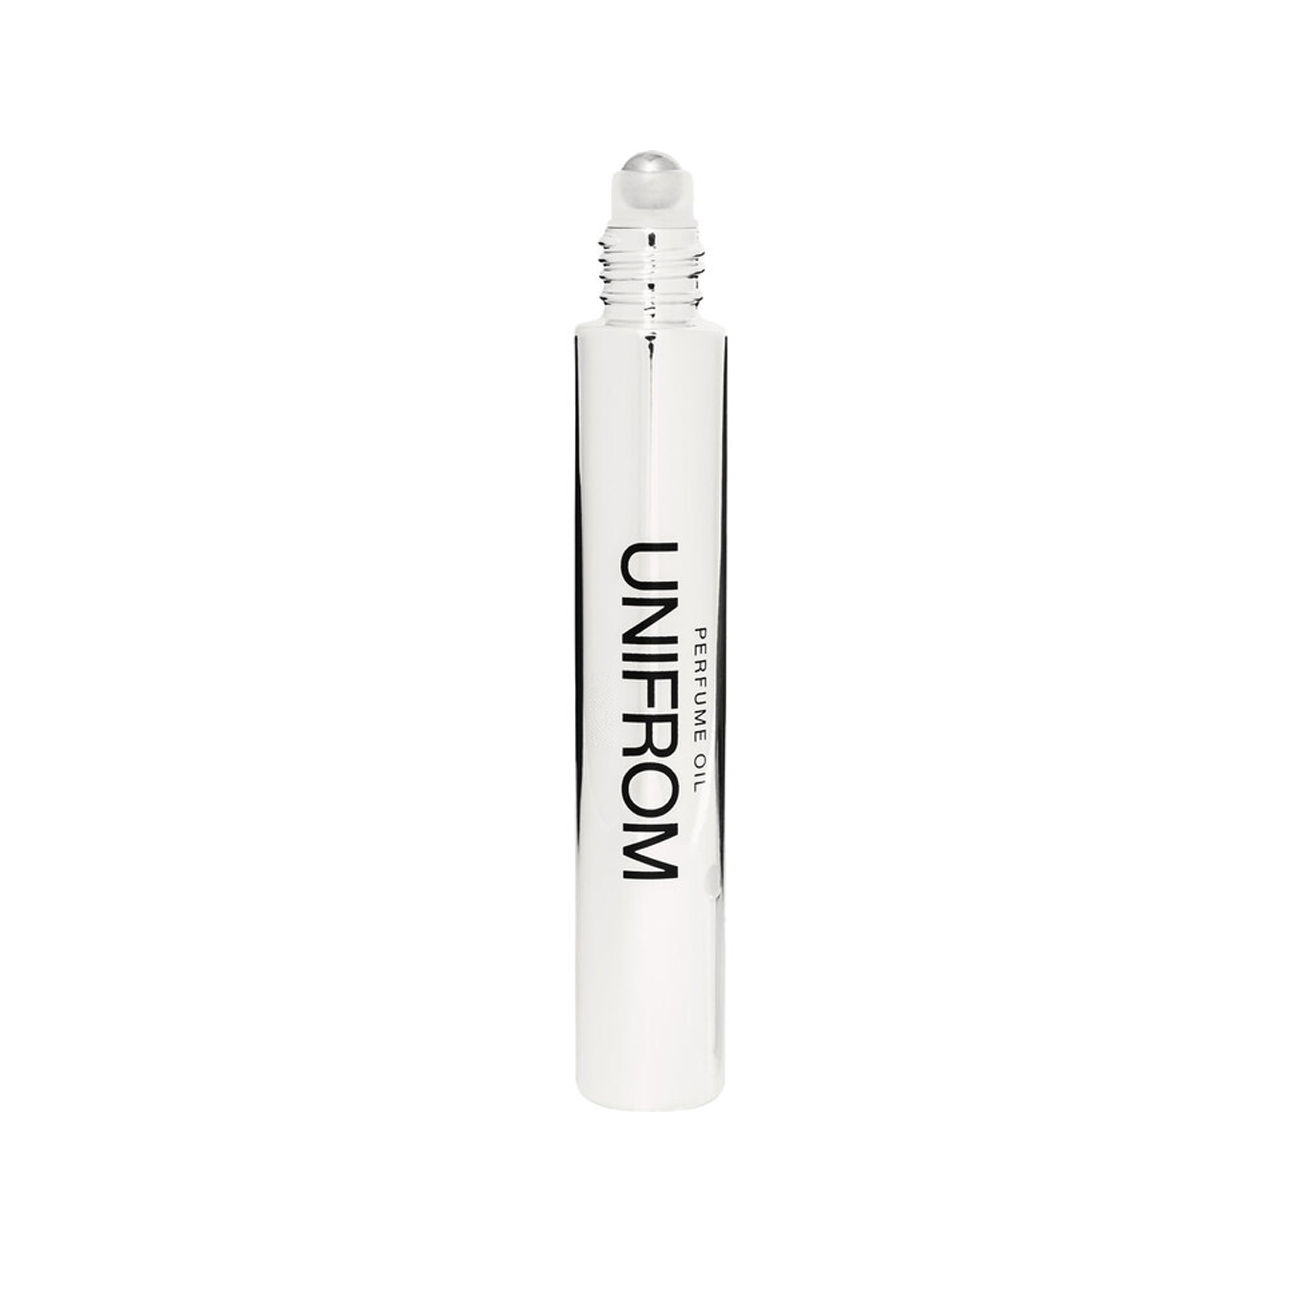 Unifrom Limbo Perfume Oil 10ml  - Cheap Juzsports Jordan Outlet